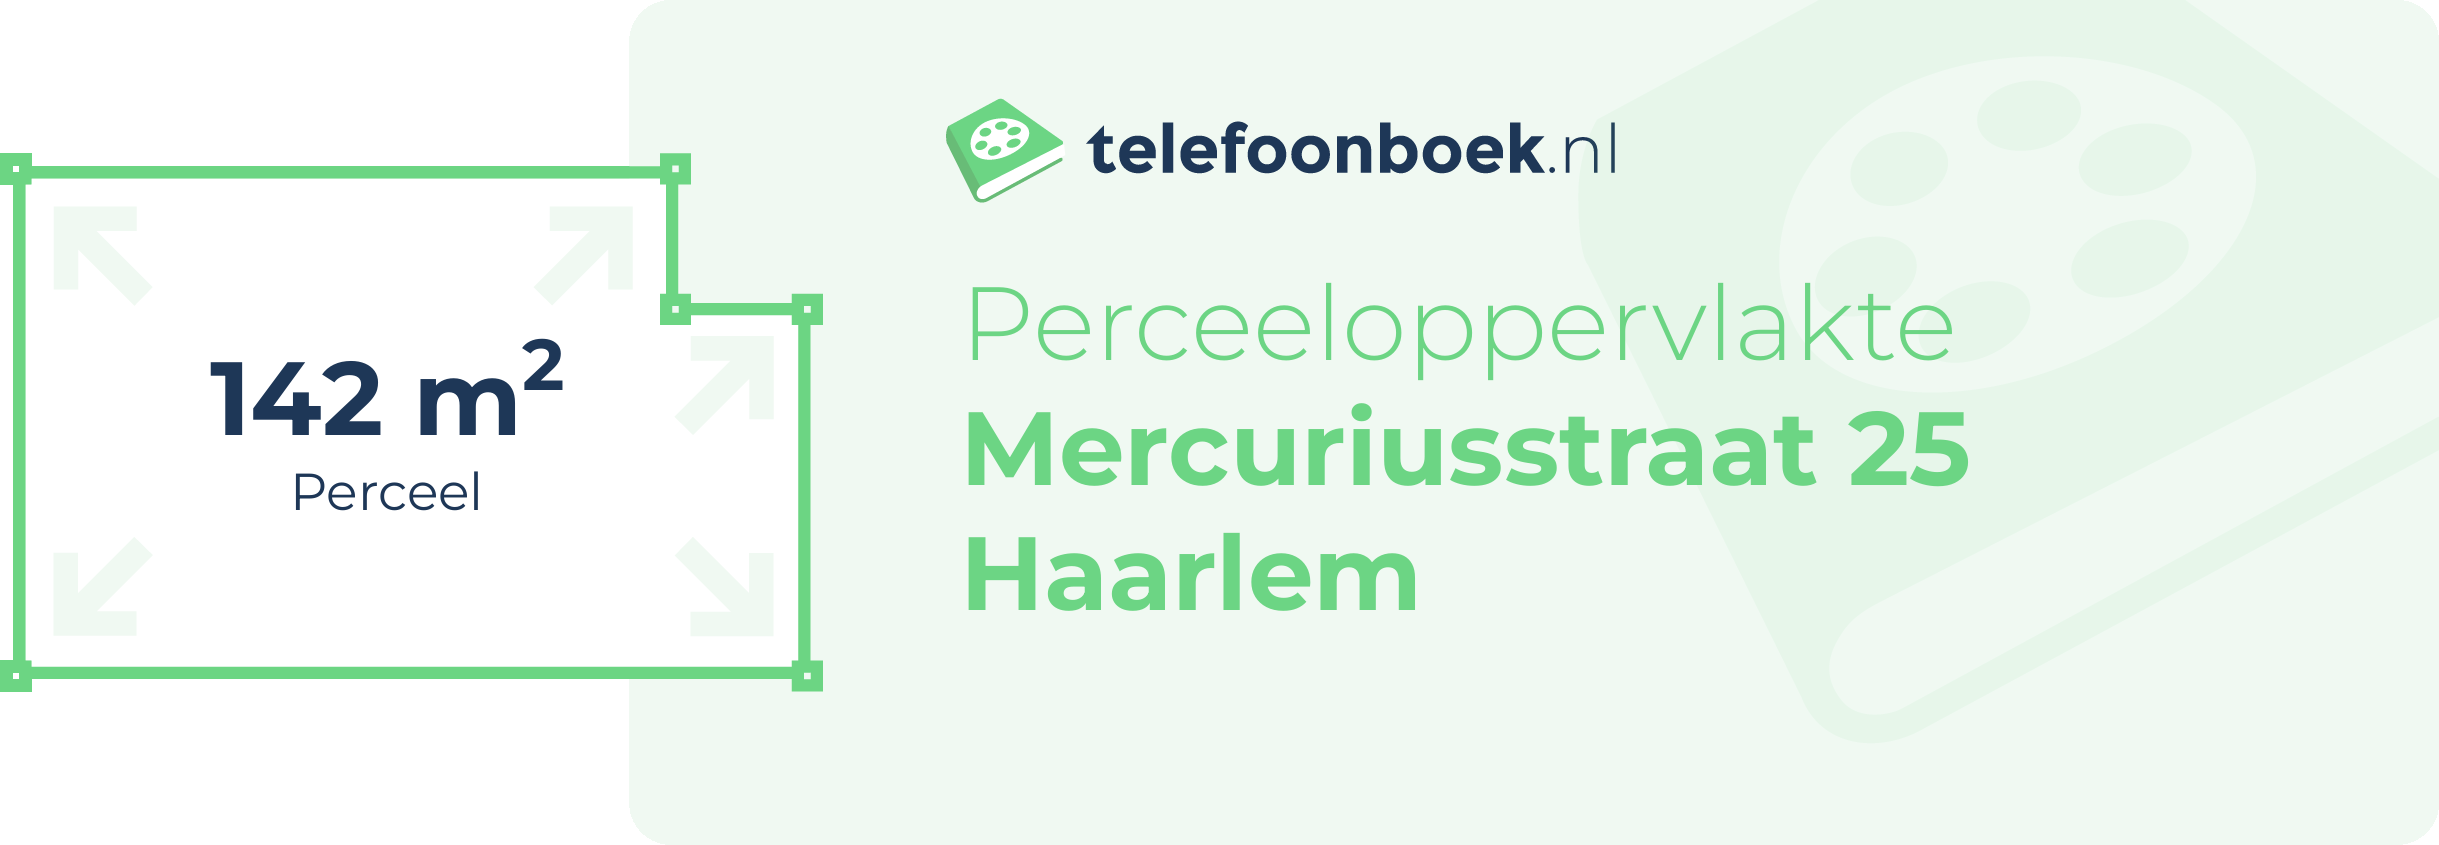 Perceeloppervlakte Mercuriusstraat 25 Haarlem